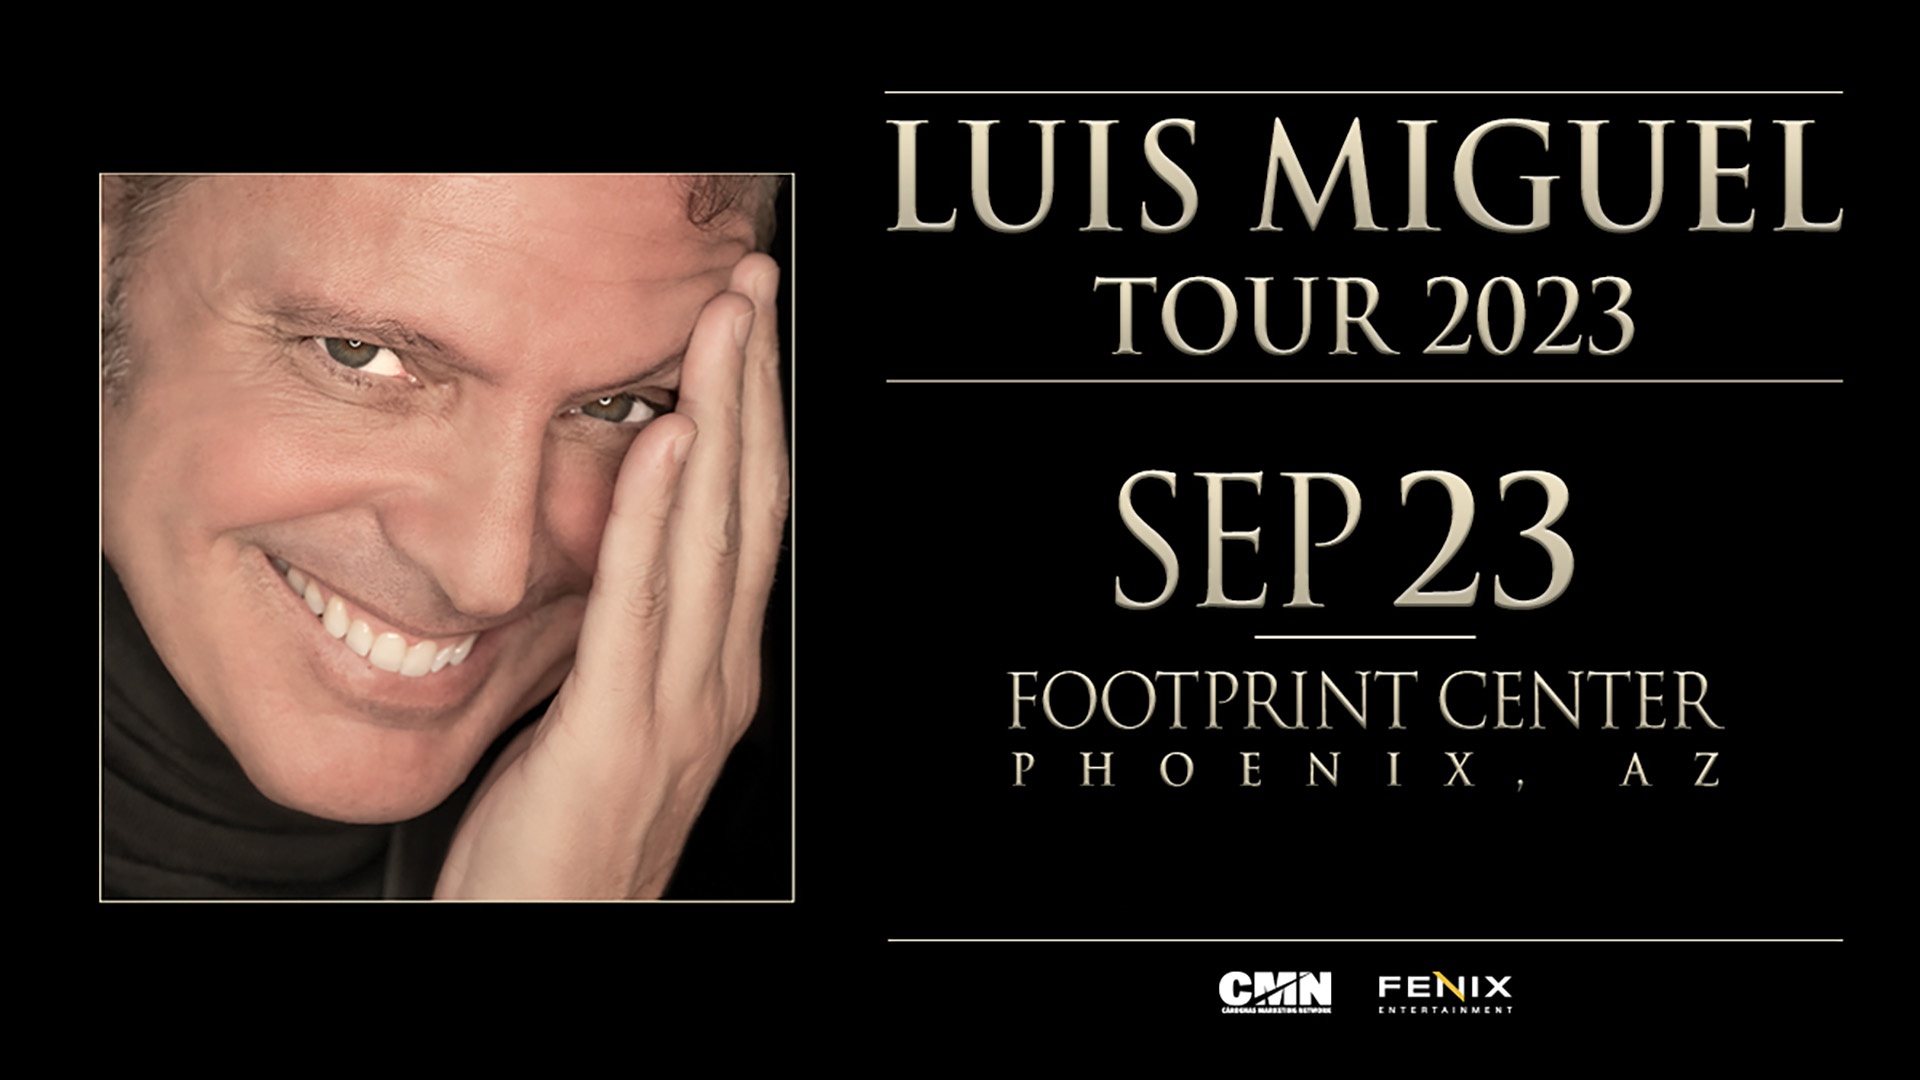 Luis Miguel Tour 2023 - September 23, 2023 at 8pm